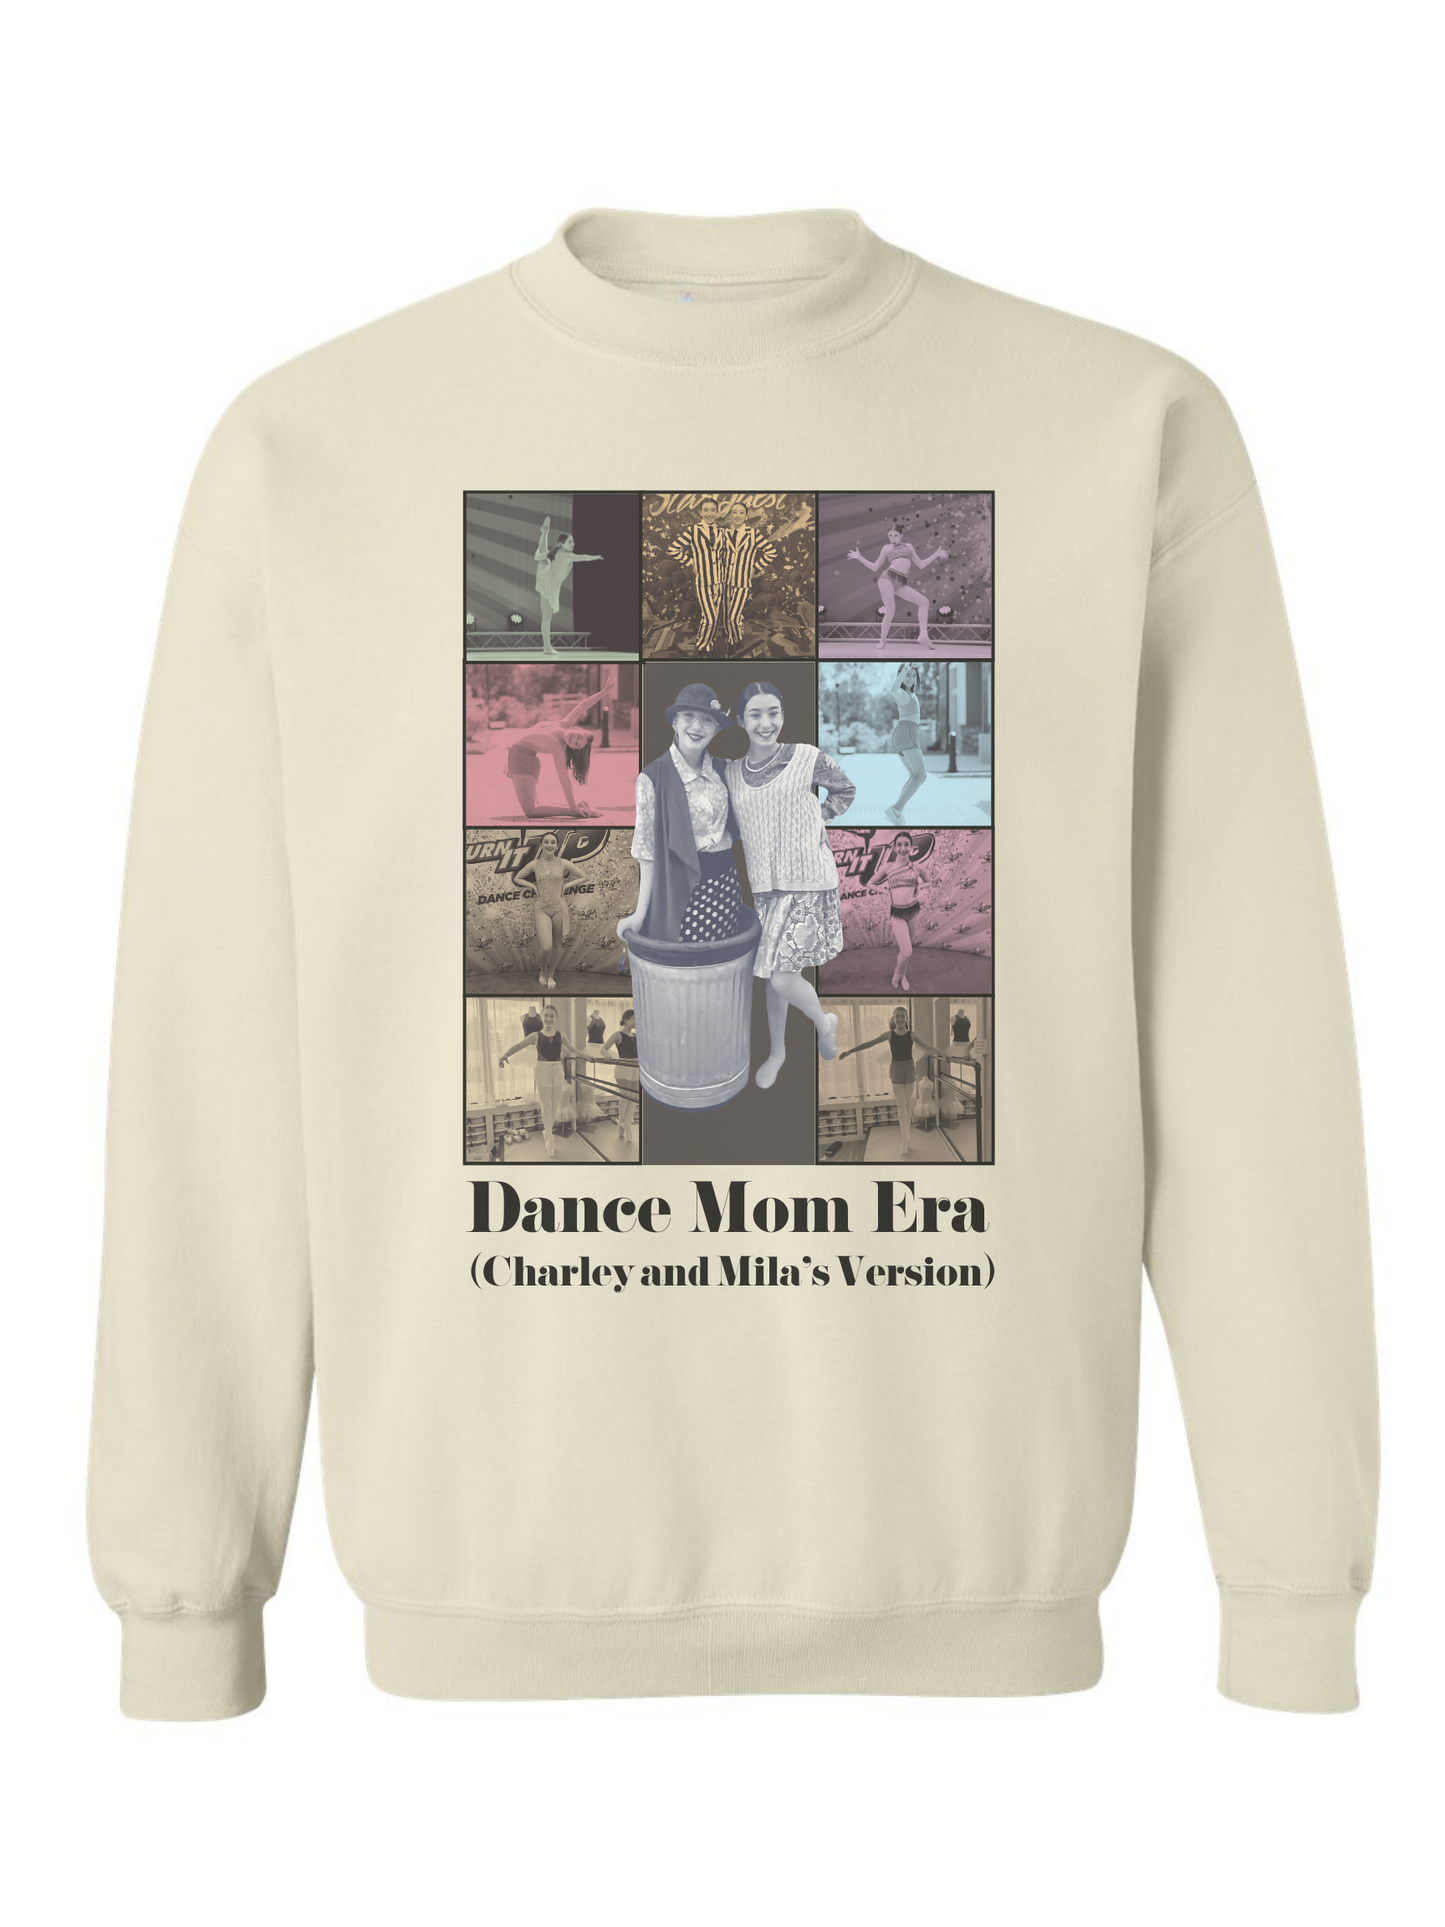 Dance Mom Era Sweatshirt (Marissa's Group)